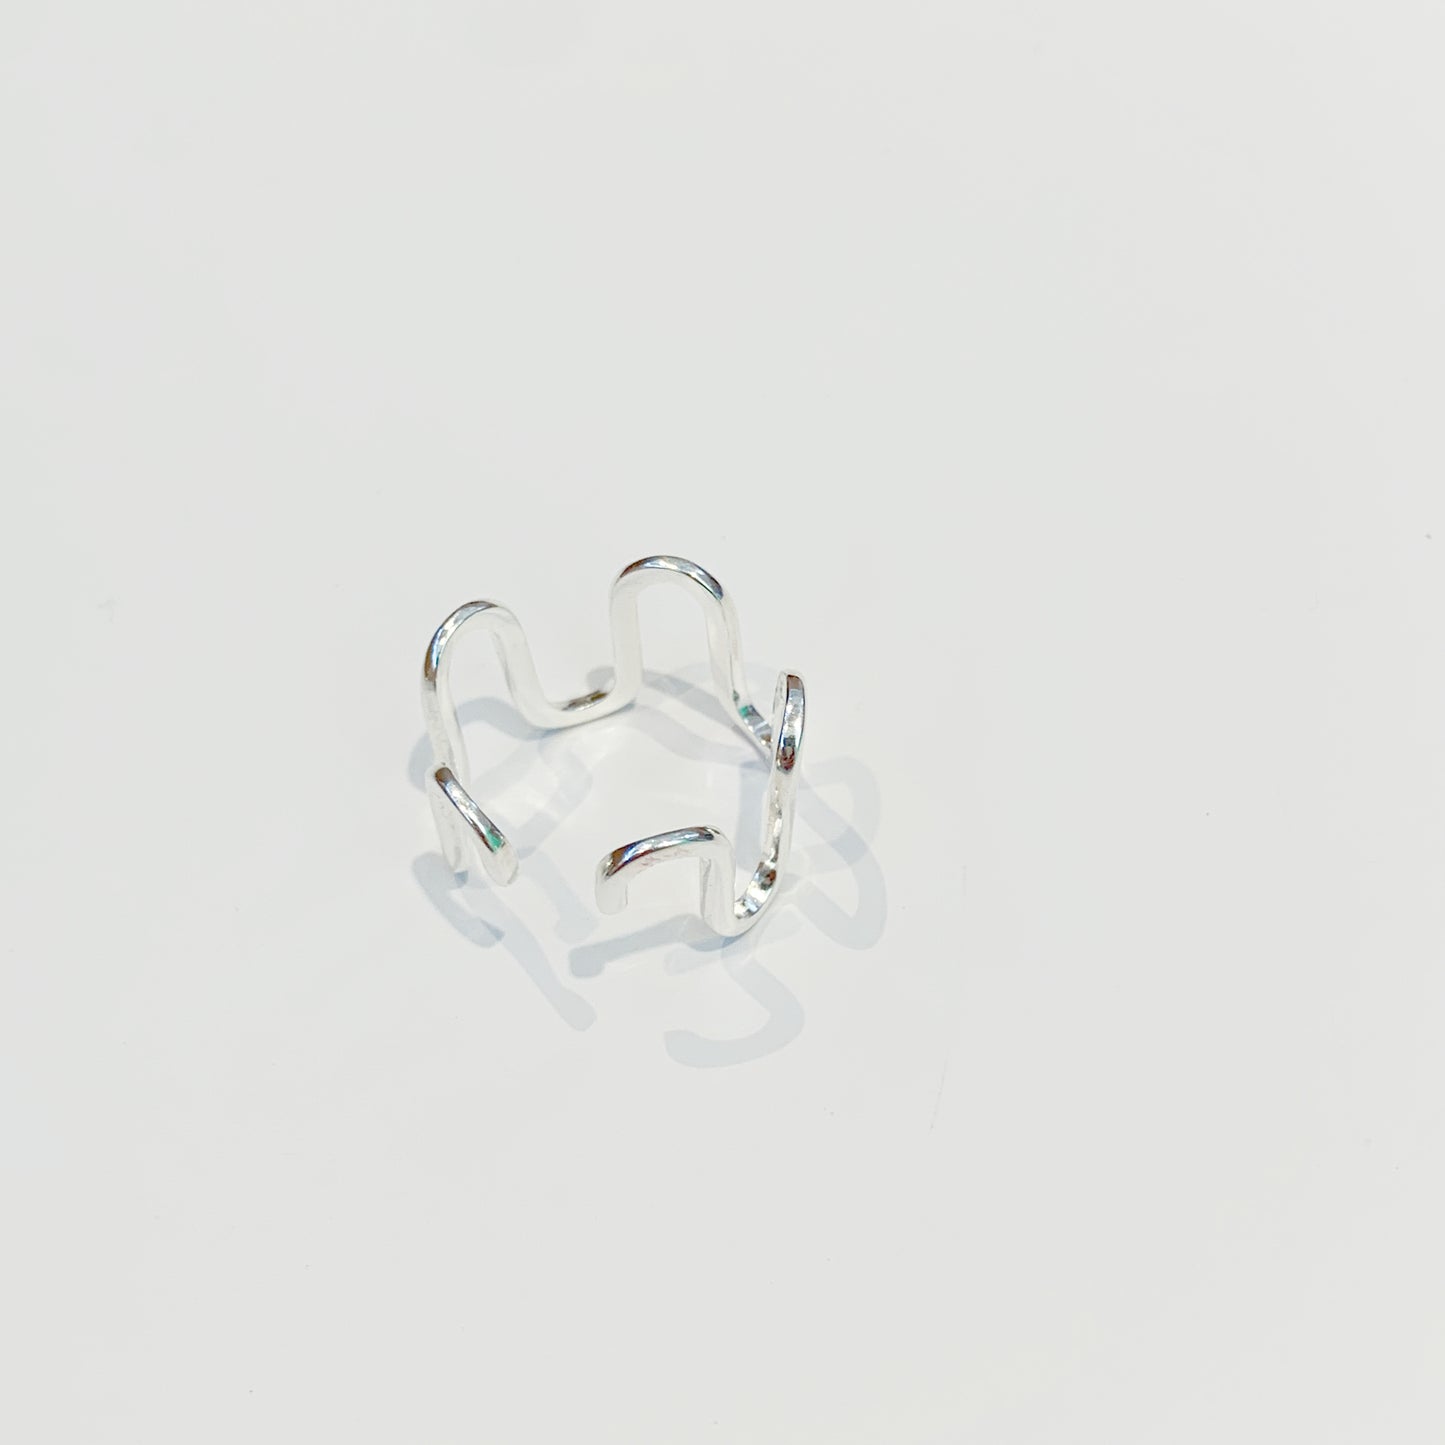 Silver Curvy Adjustable Ring